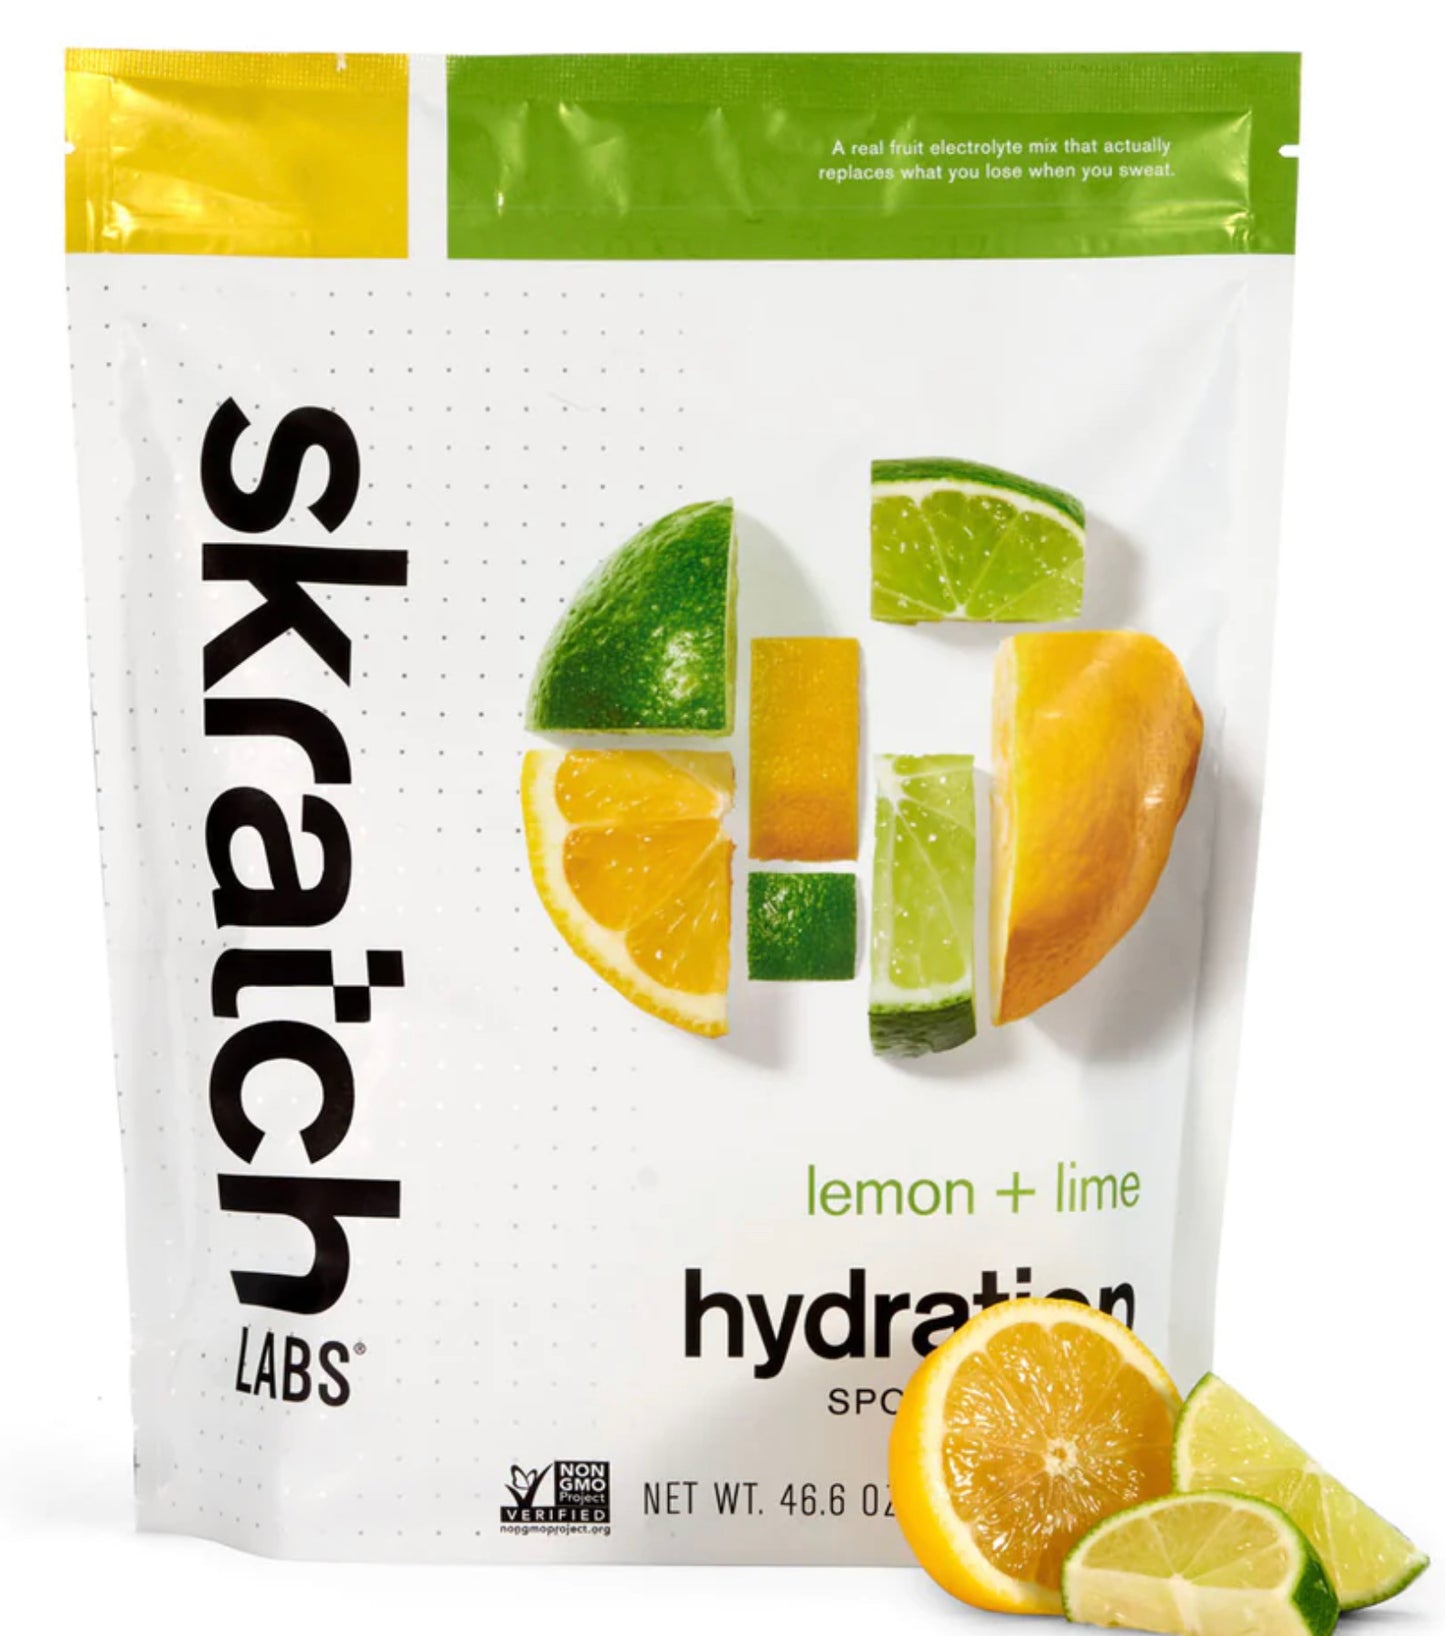 Skratch Labs - Sport Hydration Drink Mix